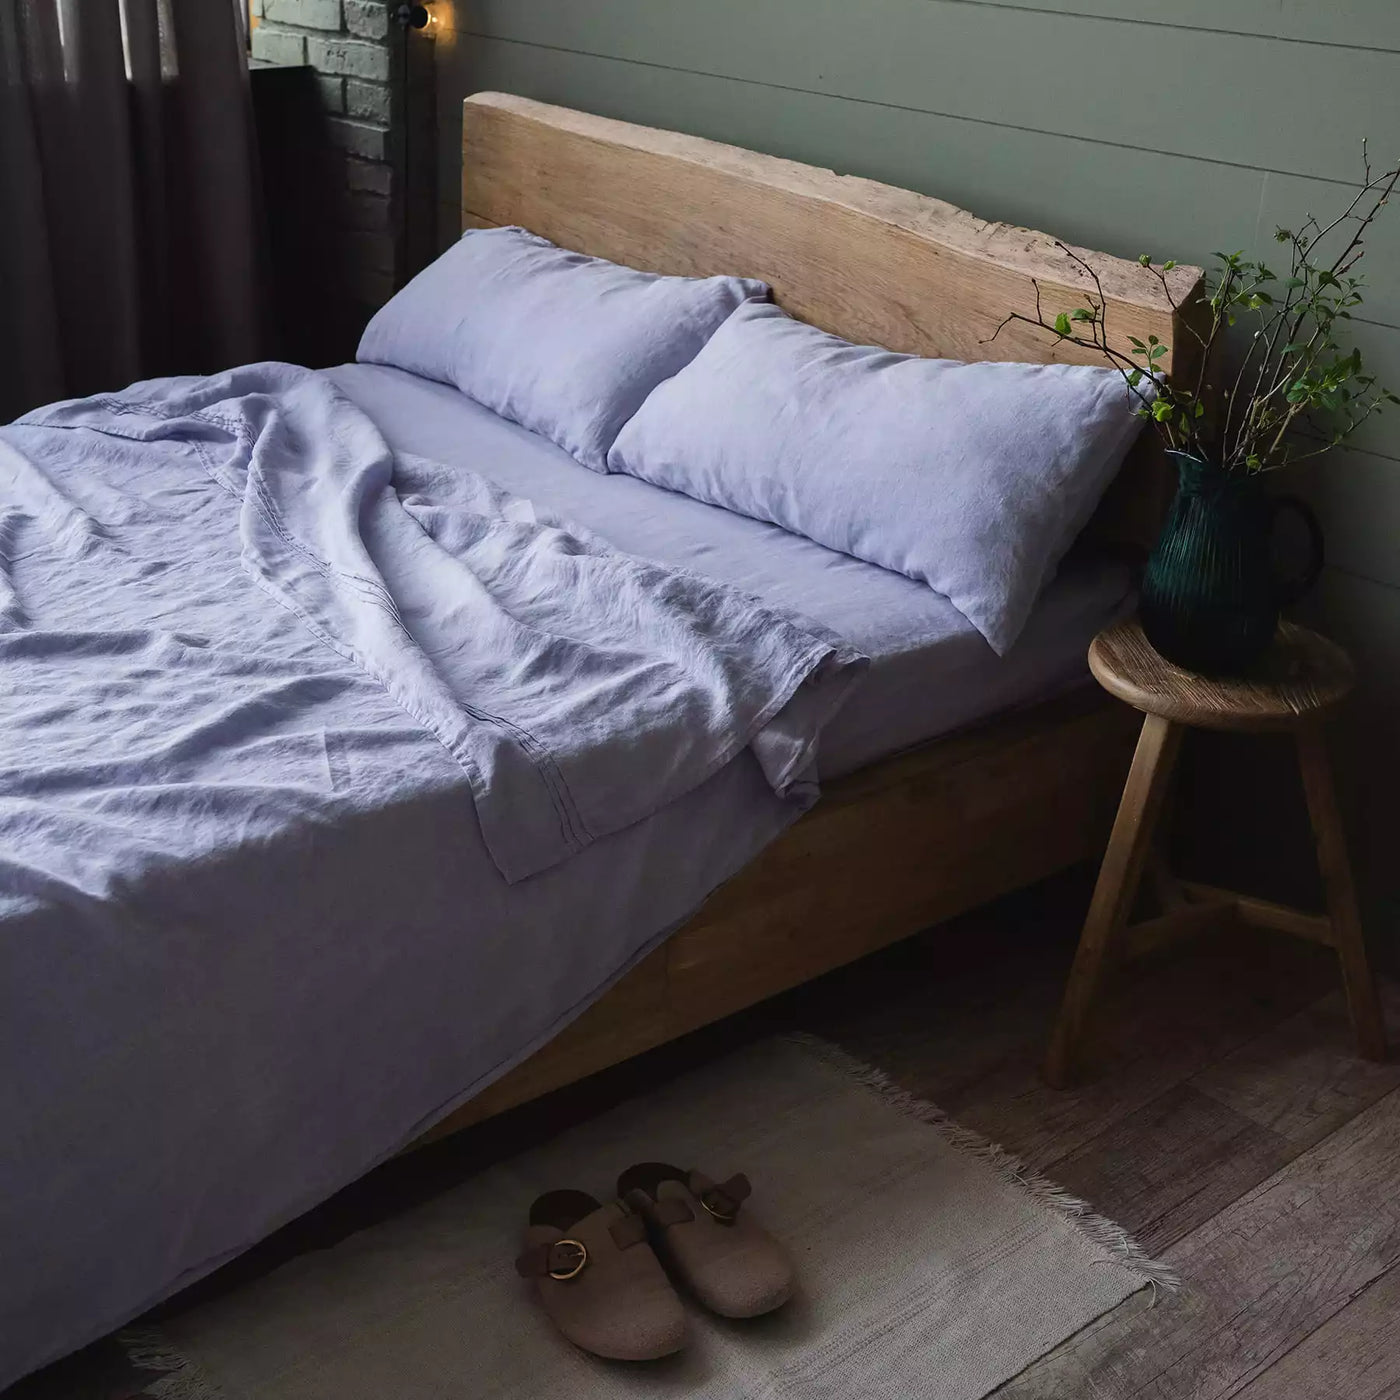 Linen bedding set with Flat sheet 240x270 in Lavender flower